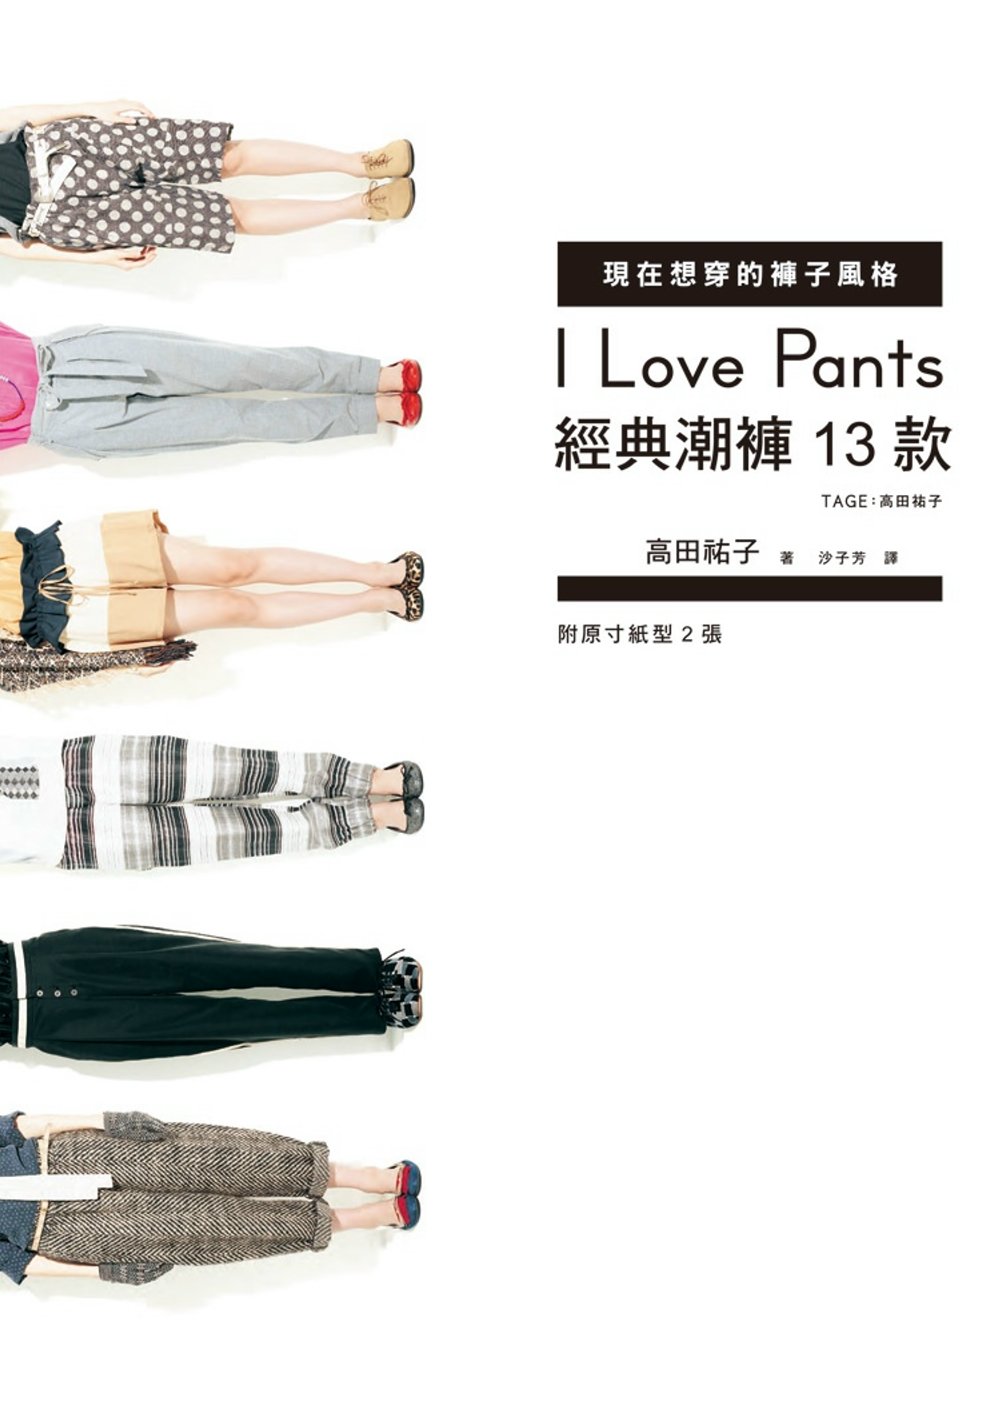 I Love Pants現在想穿的褲子風格：經典潮褲13款（附紙型）